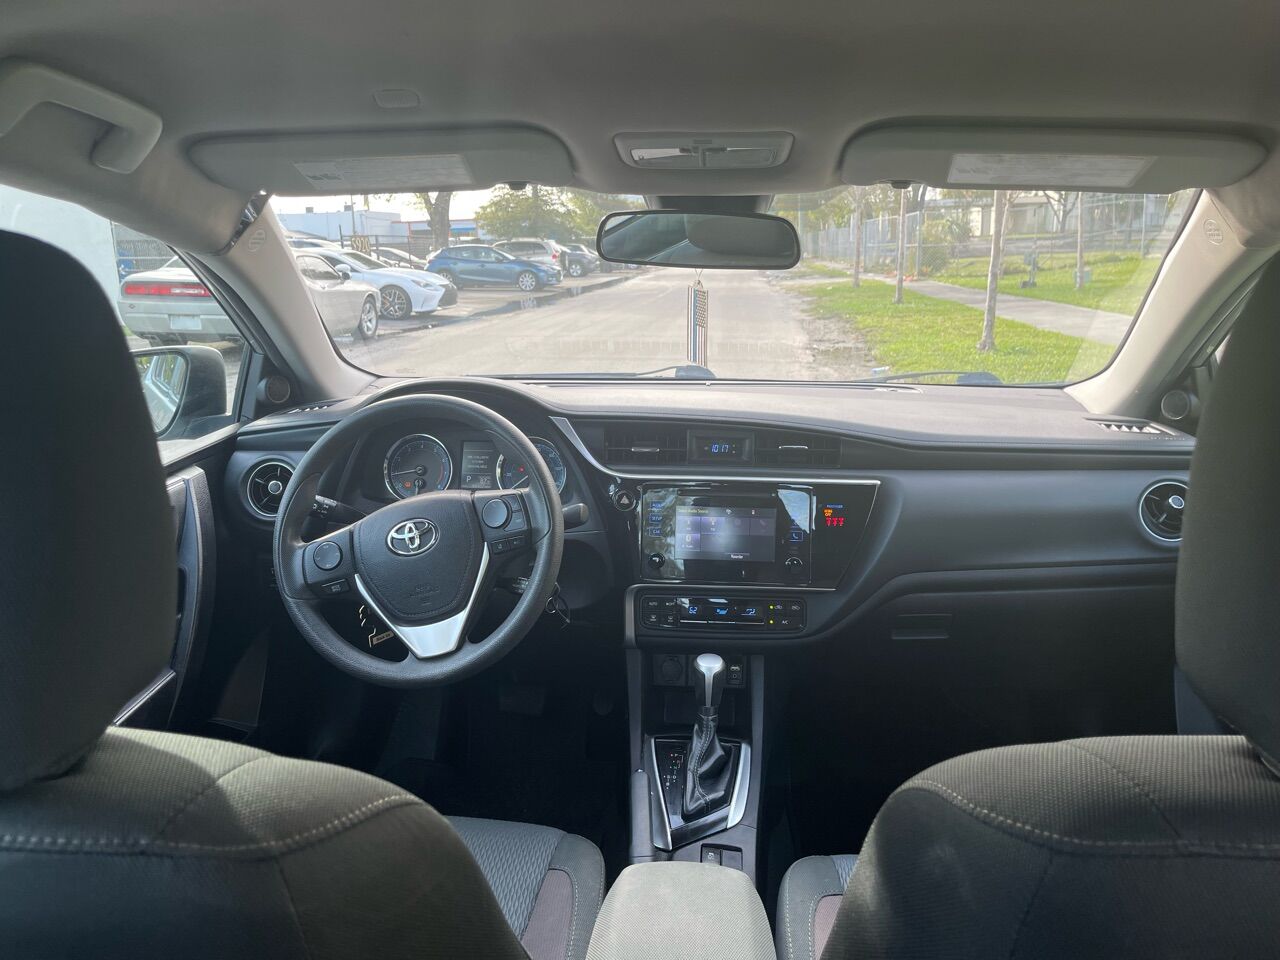 2019 TOYOTA Corolla Sedan - $10,500